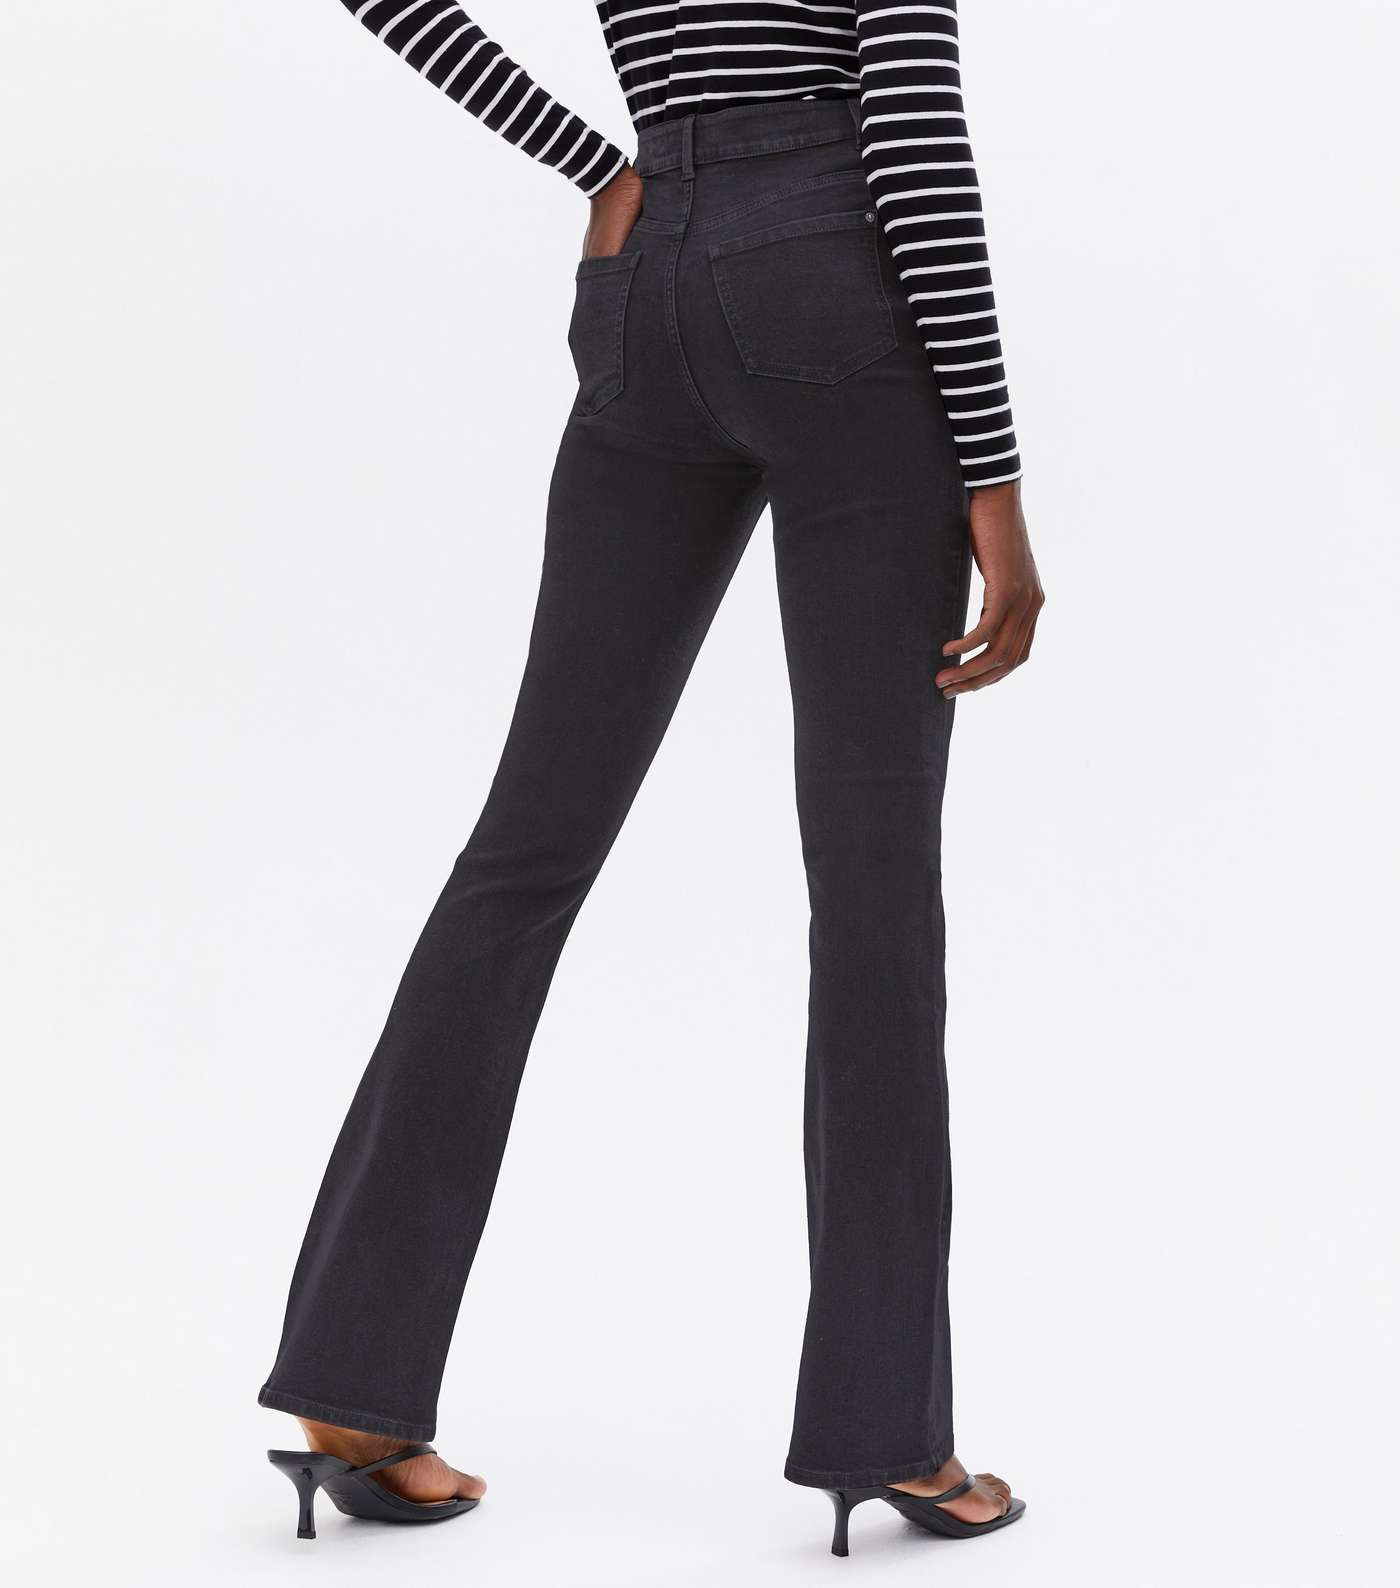 Tall Black Waist Enhance Quinn Bootcut Jeans Image 4